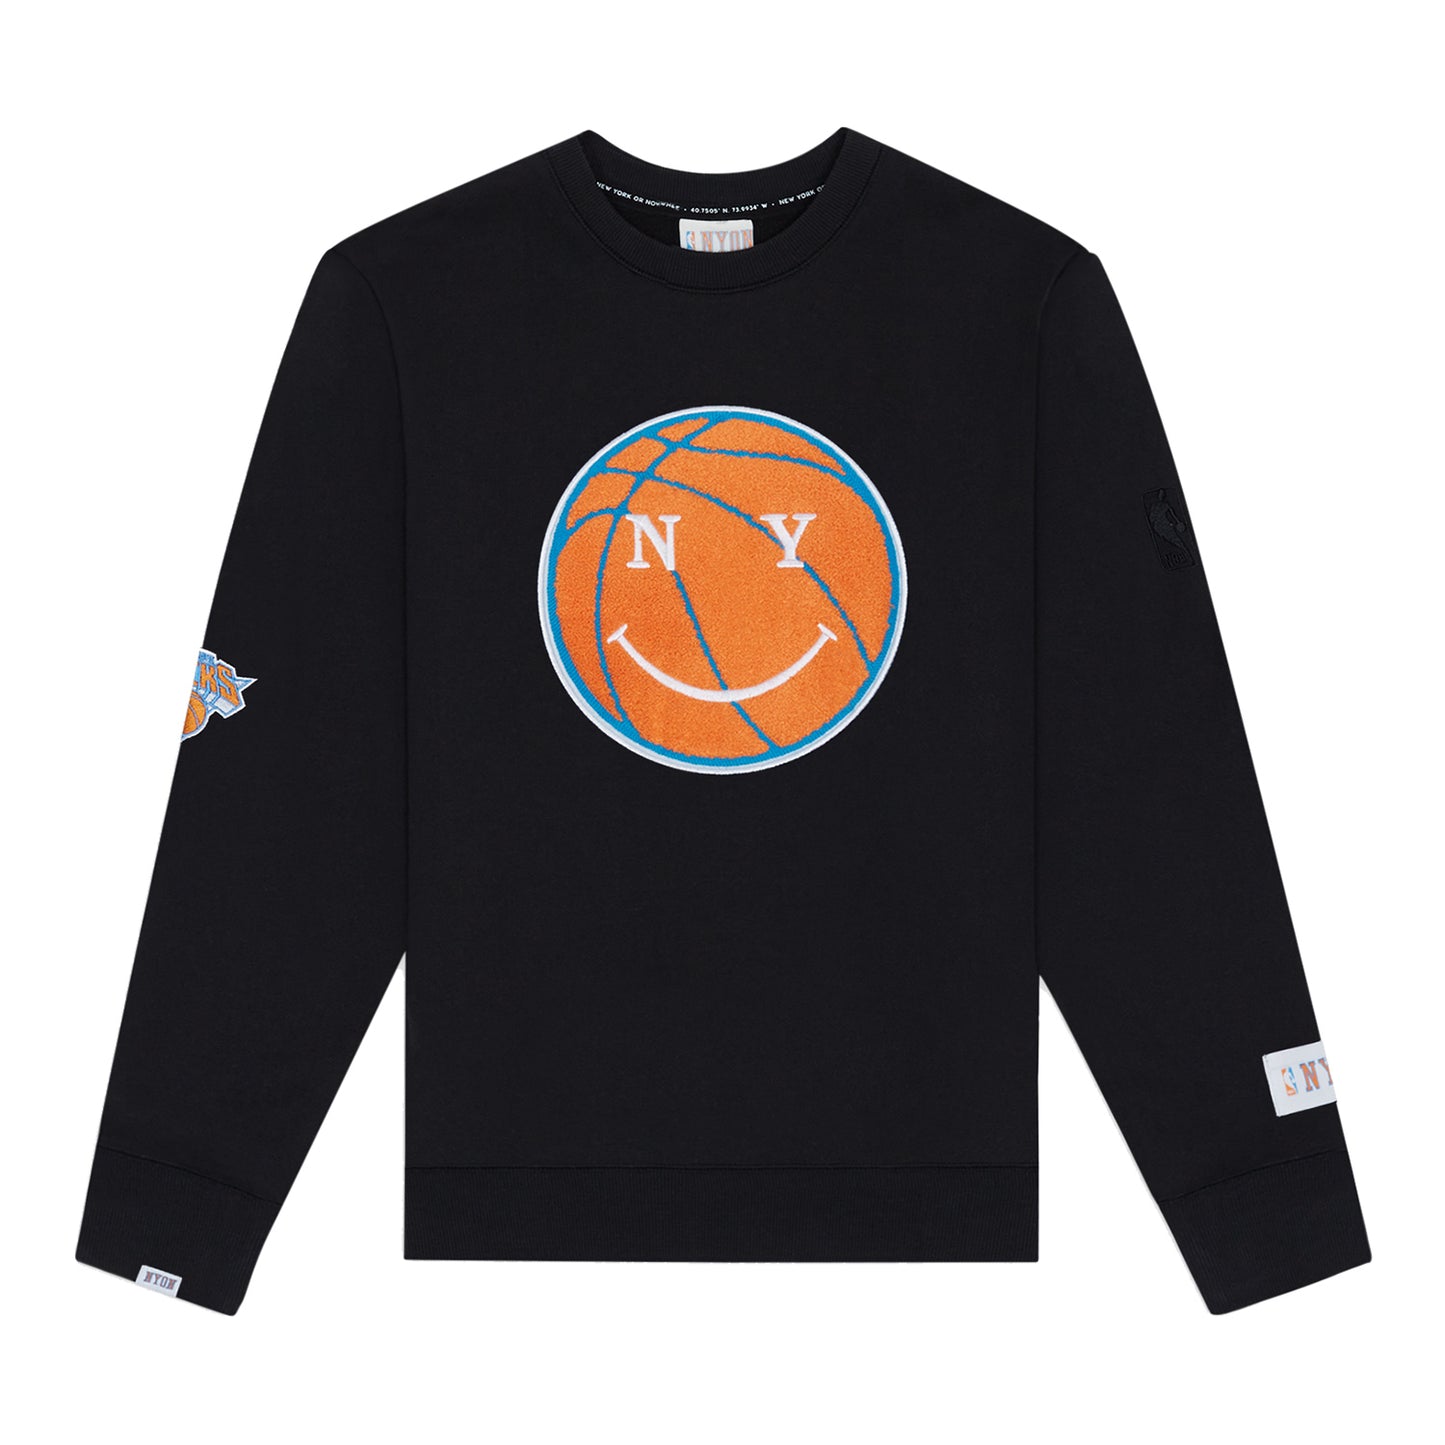 NYON x Knicks Black "Mascot" Crew - Front View